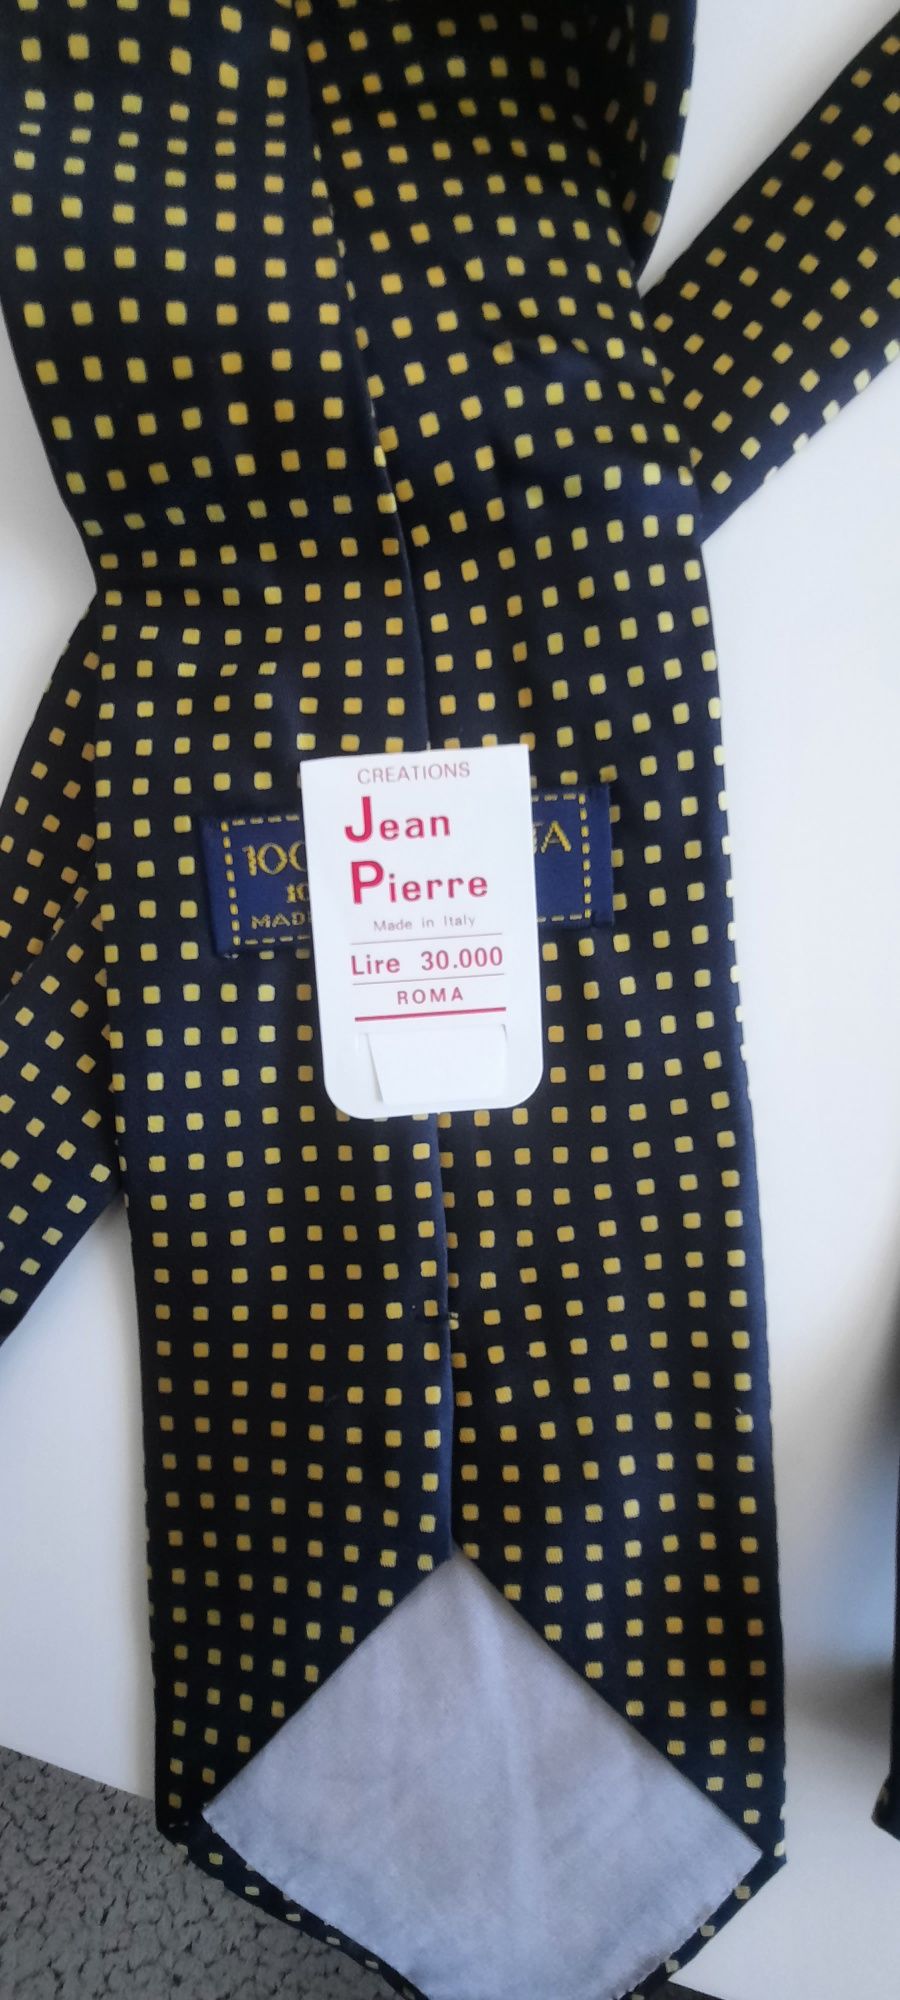 Vand cravate Jean Pierre  Nou